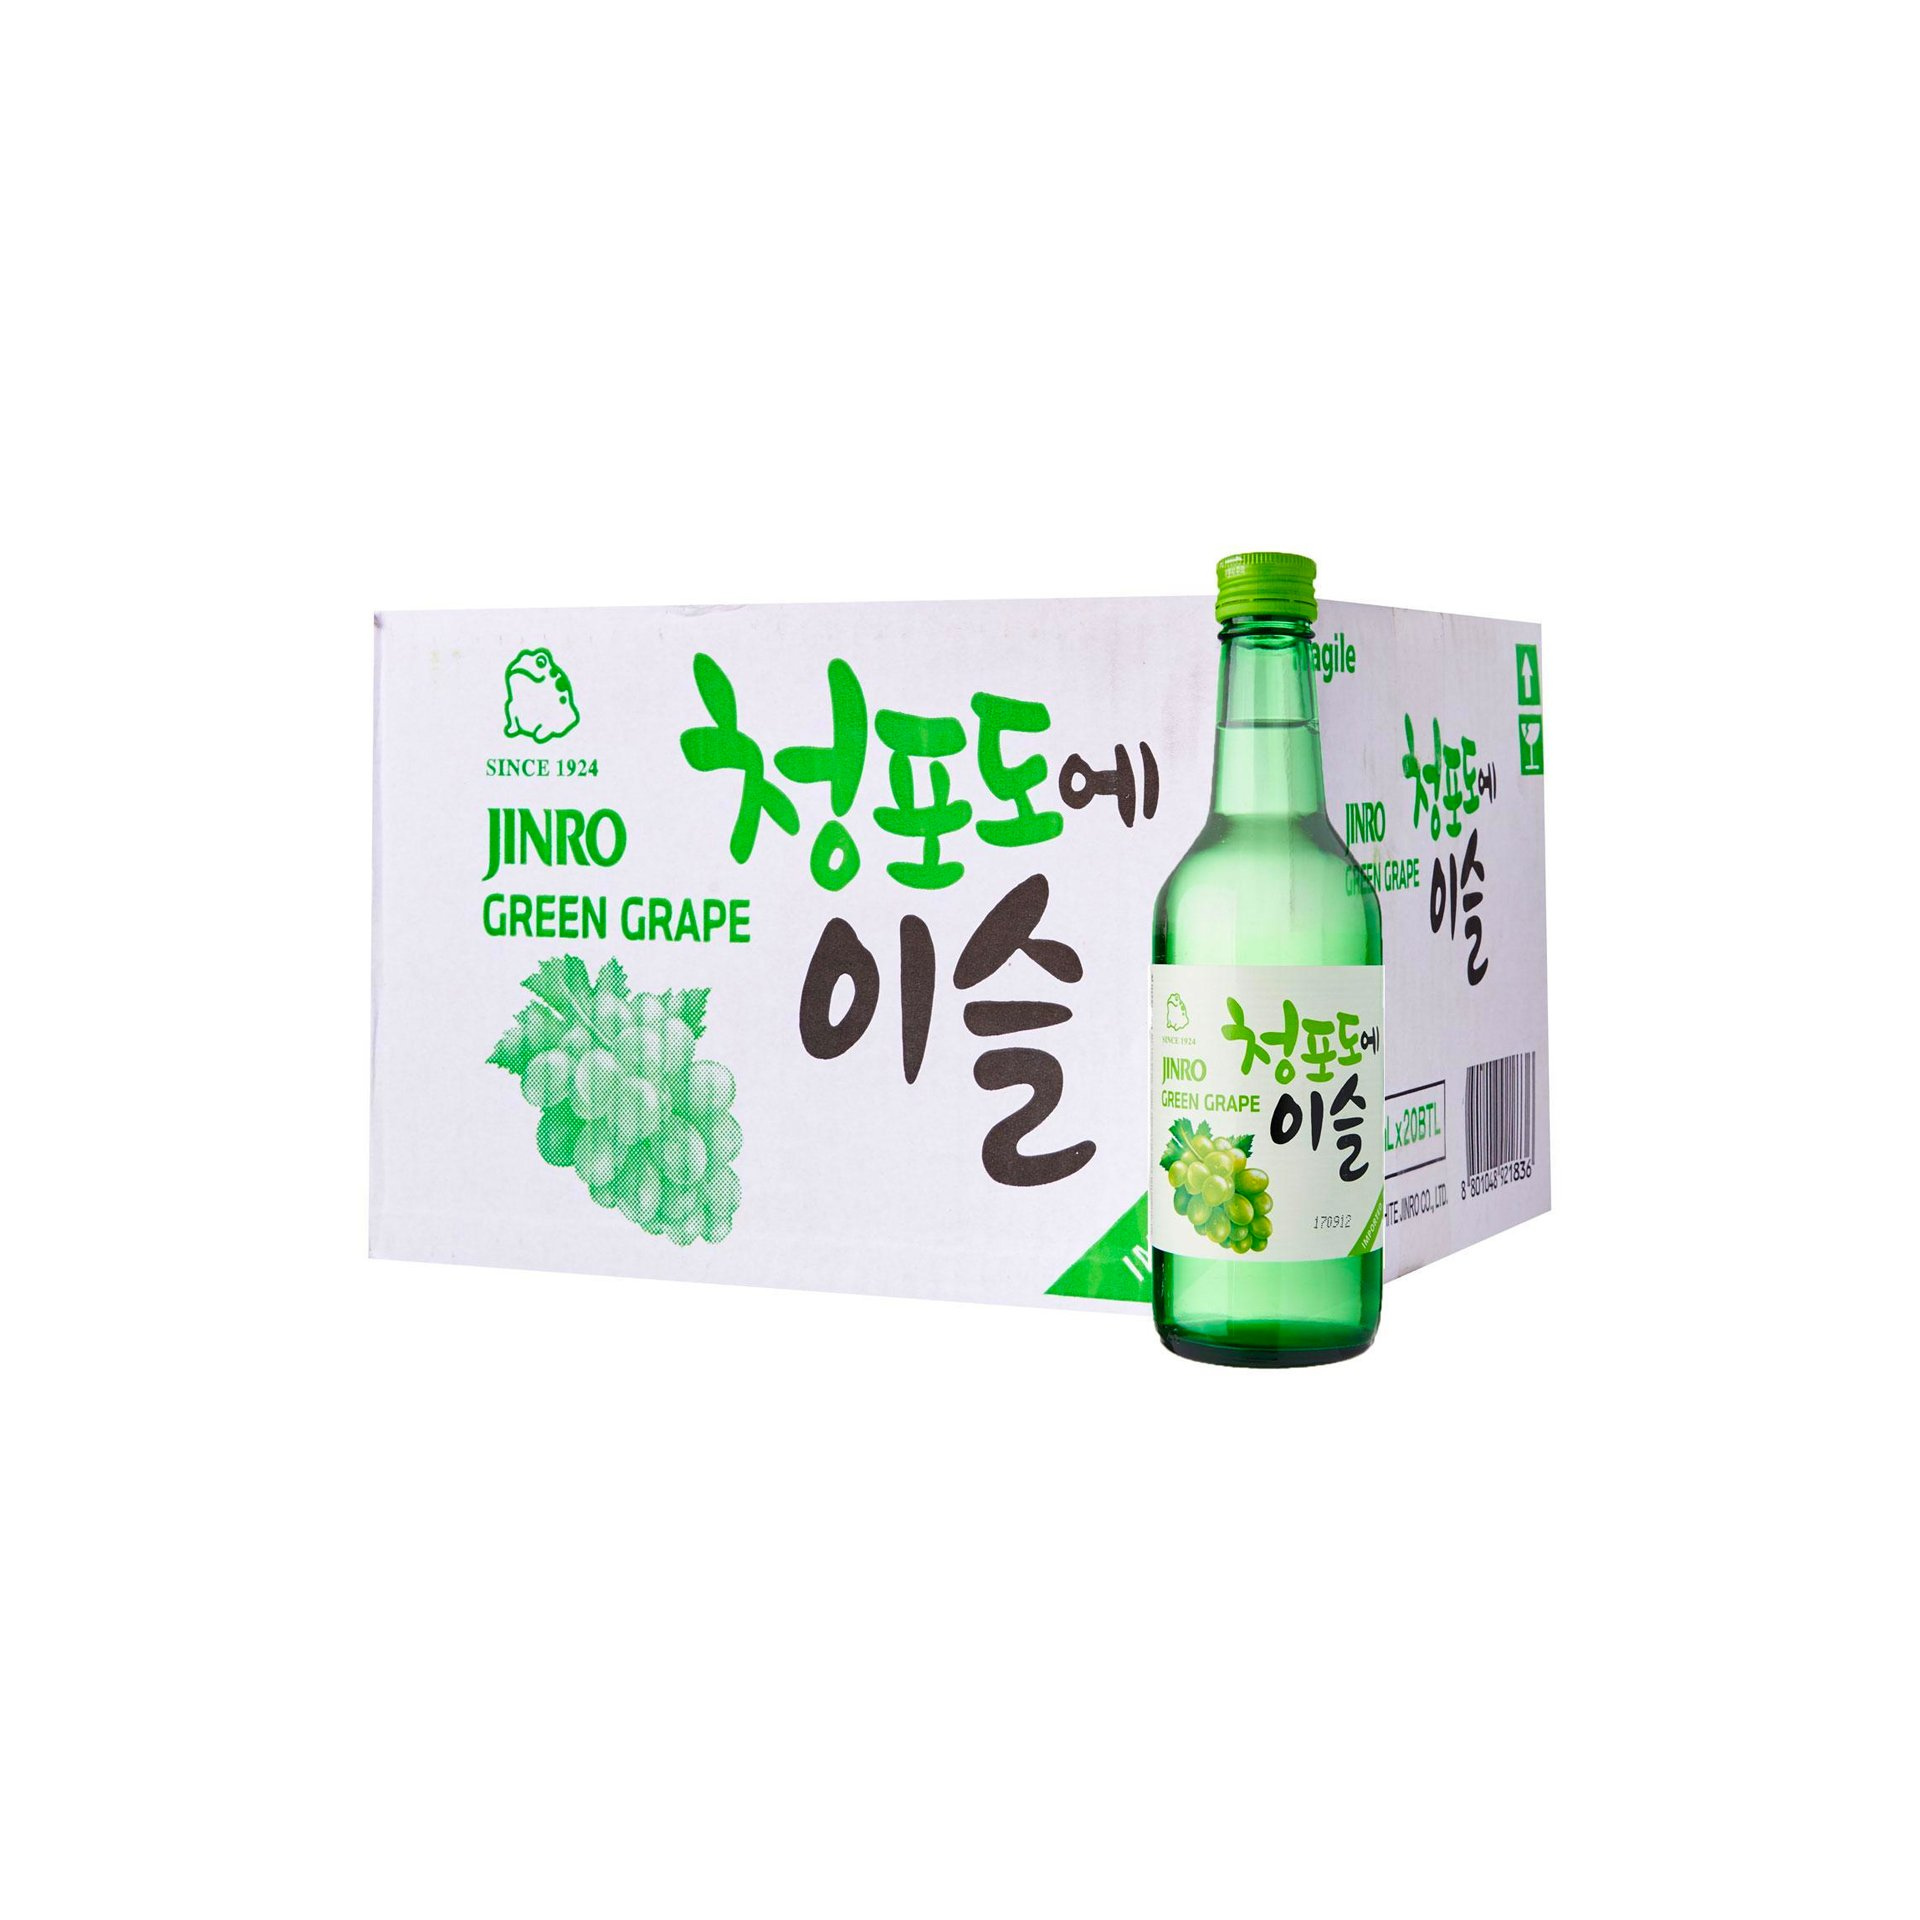 Chamisul Jinro Green Grape Soju (20 x 360ml)